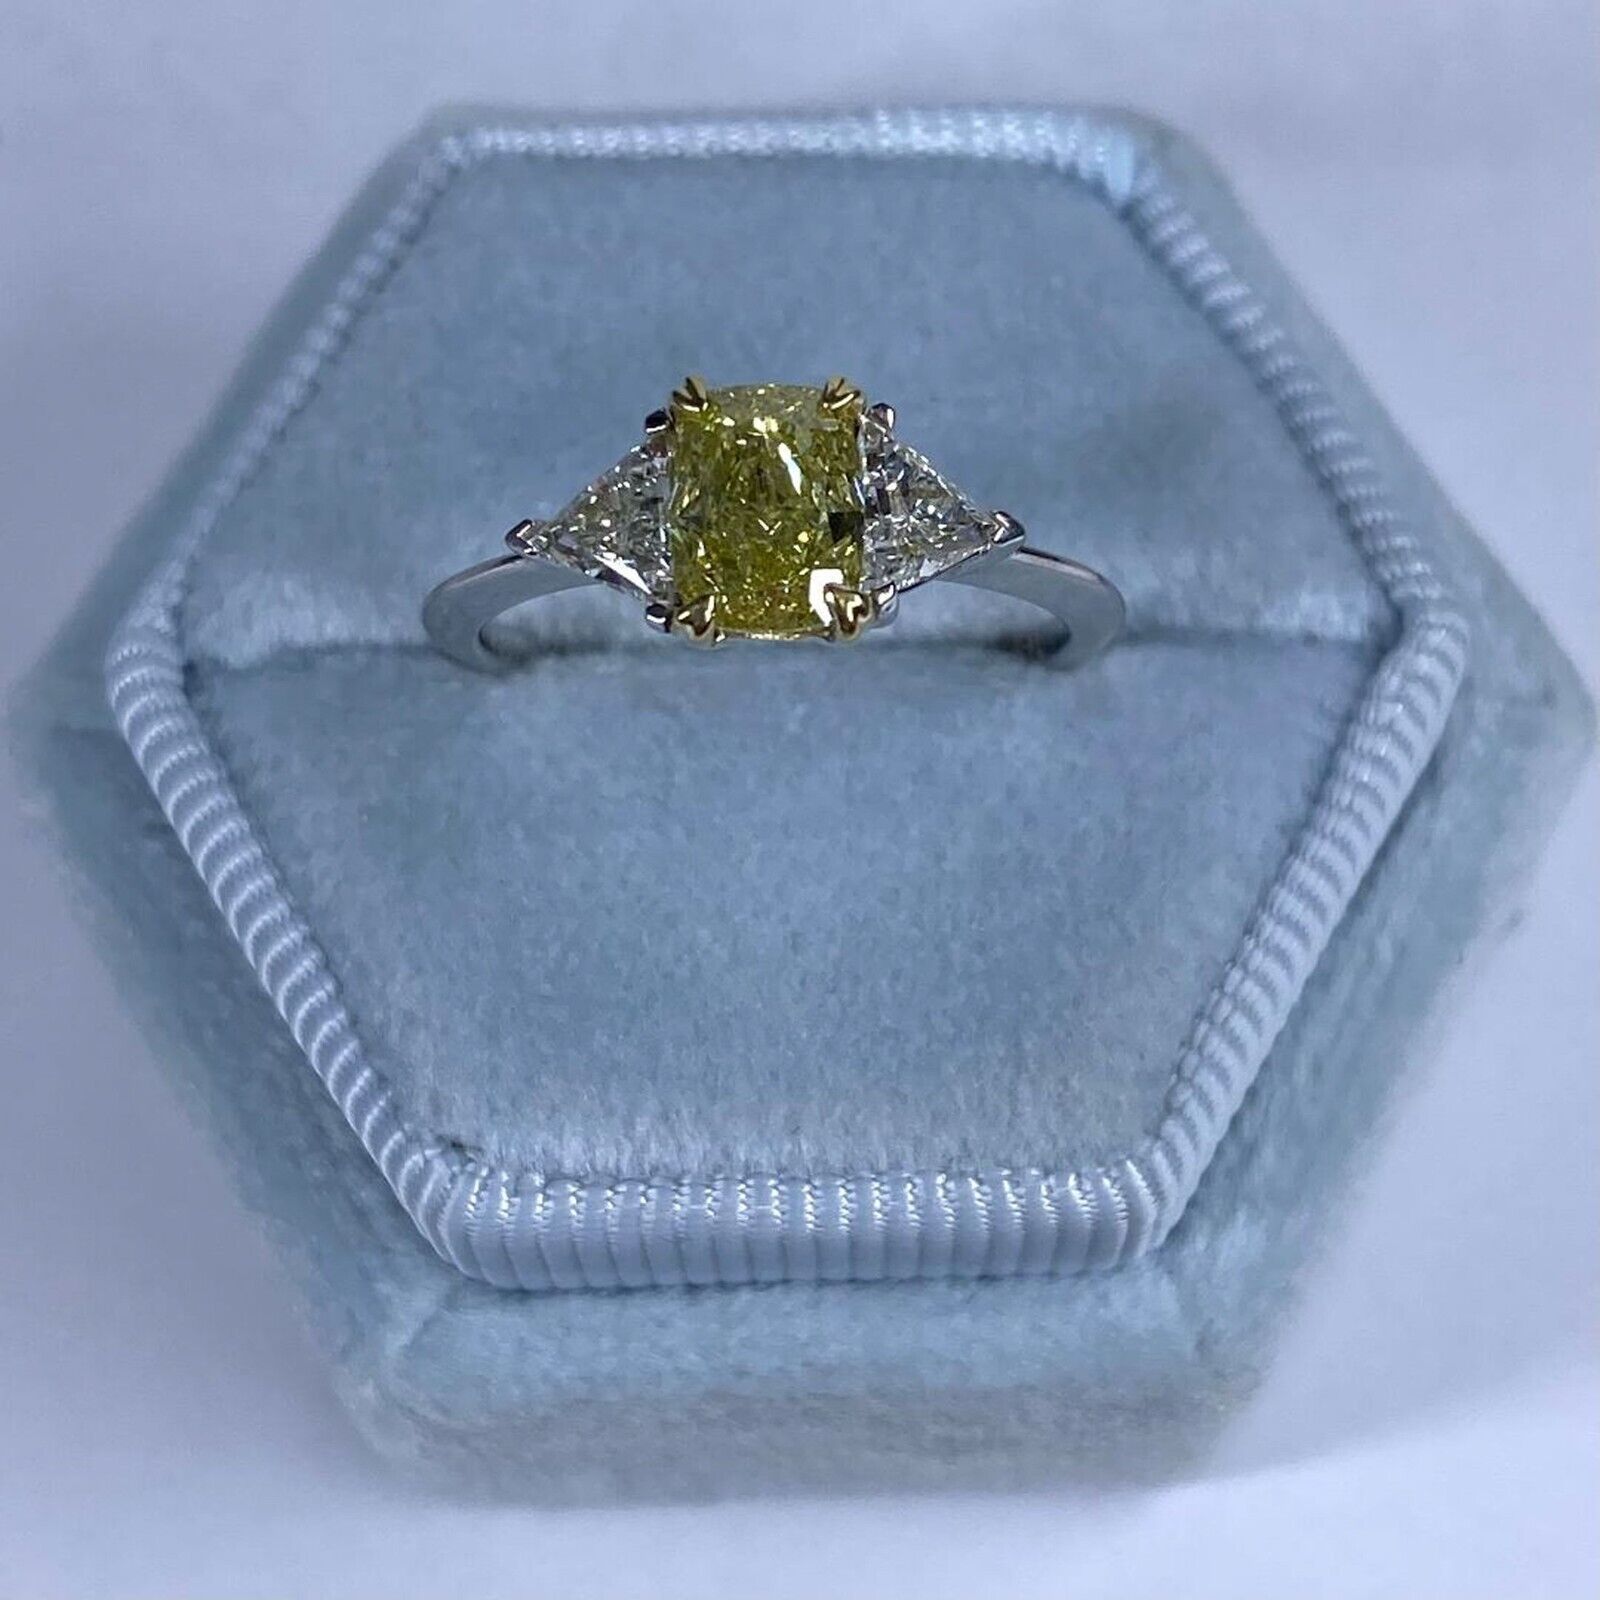 Primary image for 3 Stone GIA 1.41 TCW Intense Yellow Cushion Diamond Engagement Ring 18k Gold